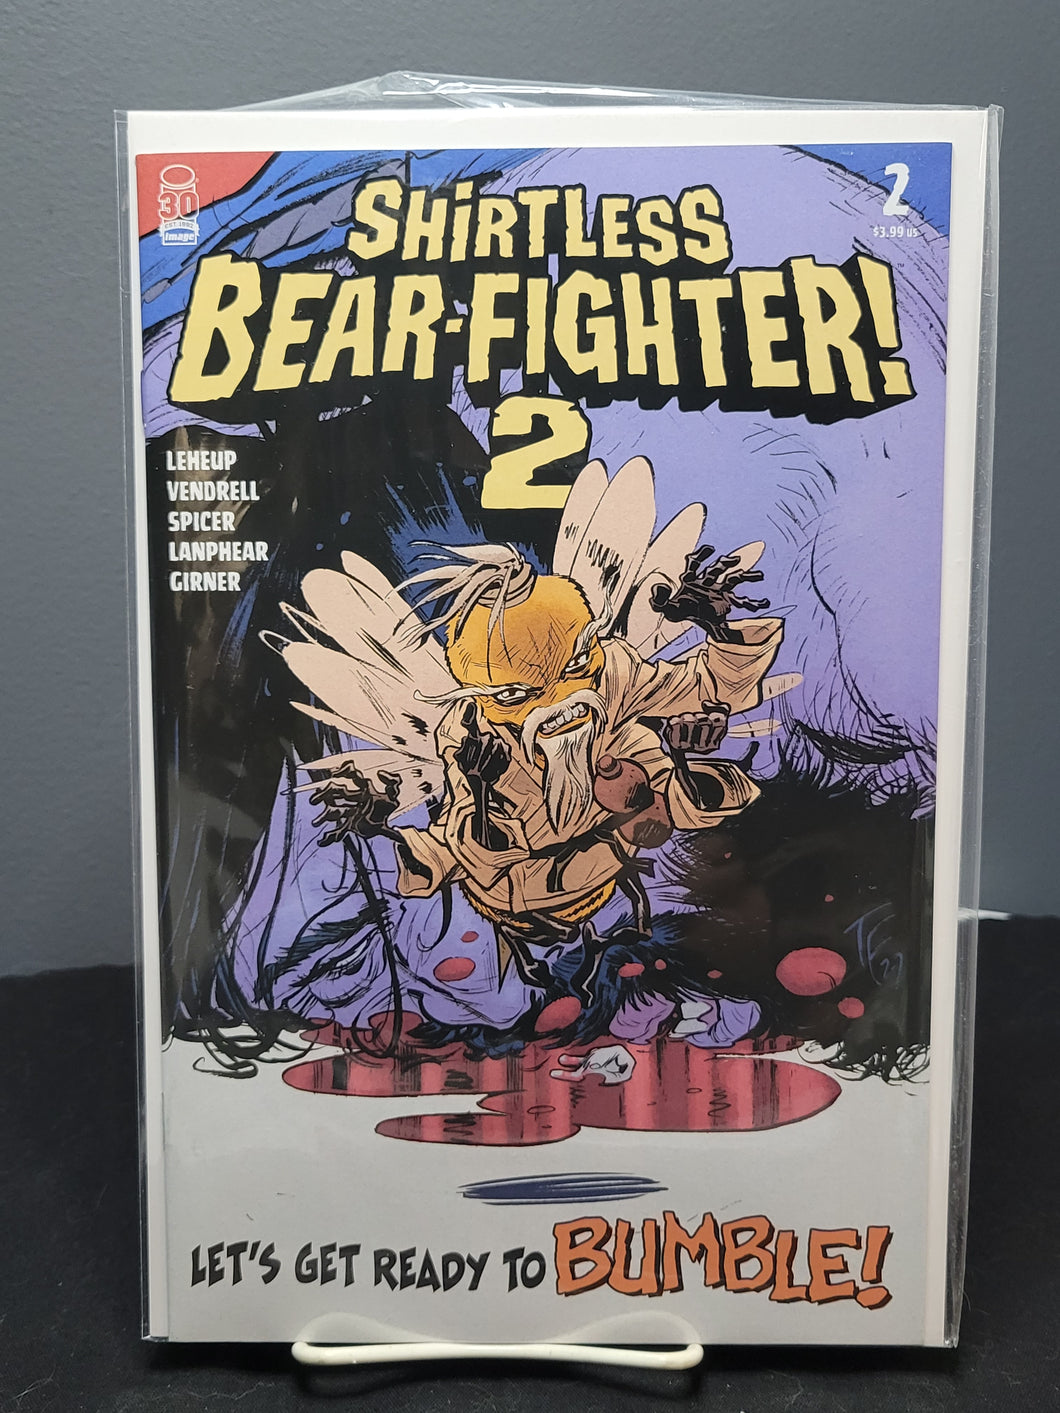 Shirtless Bear-Fighter! 2 #2 Variant